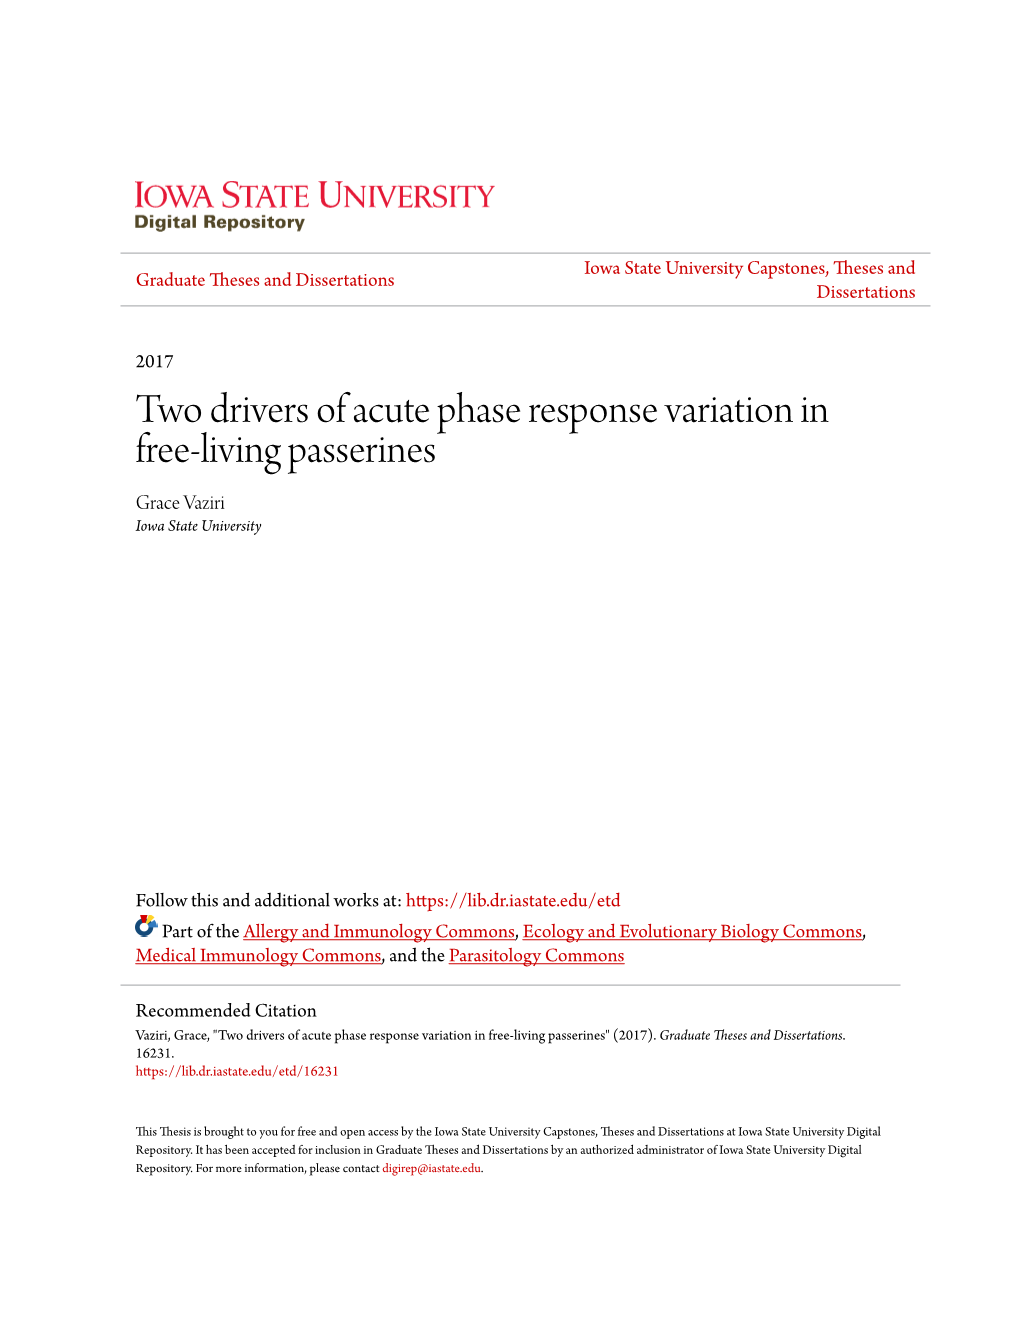 Two Drivers of Acute Phase Response Variation in Free-Living Passerines Grace Vaziri Iowa State University